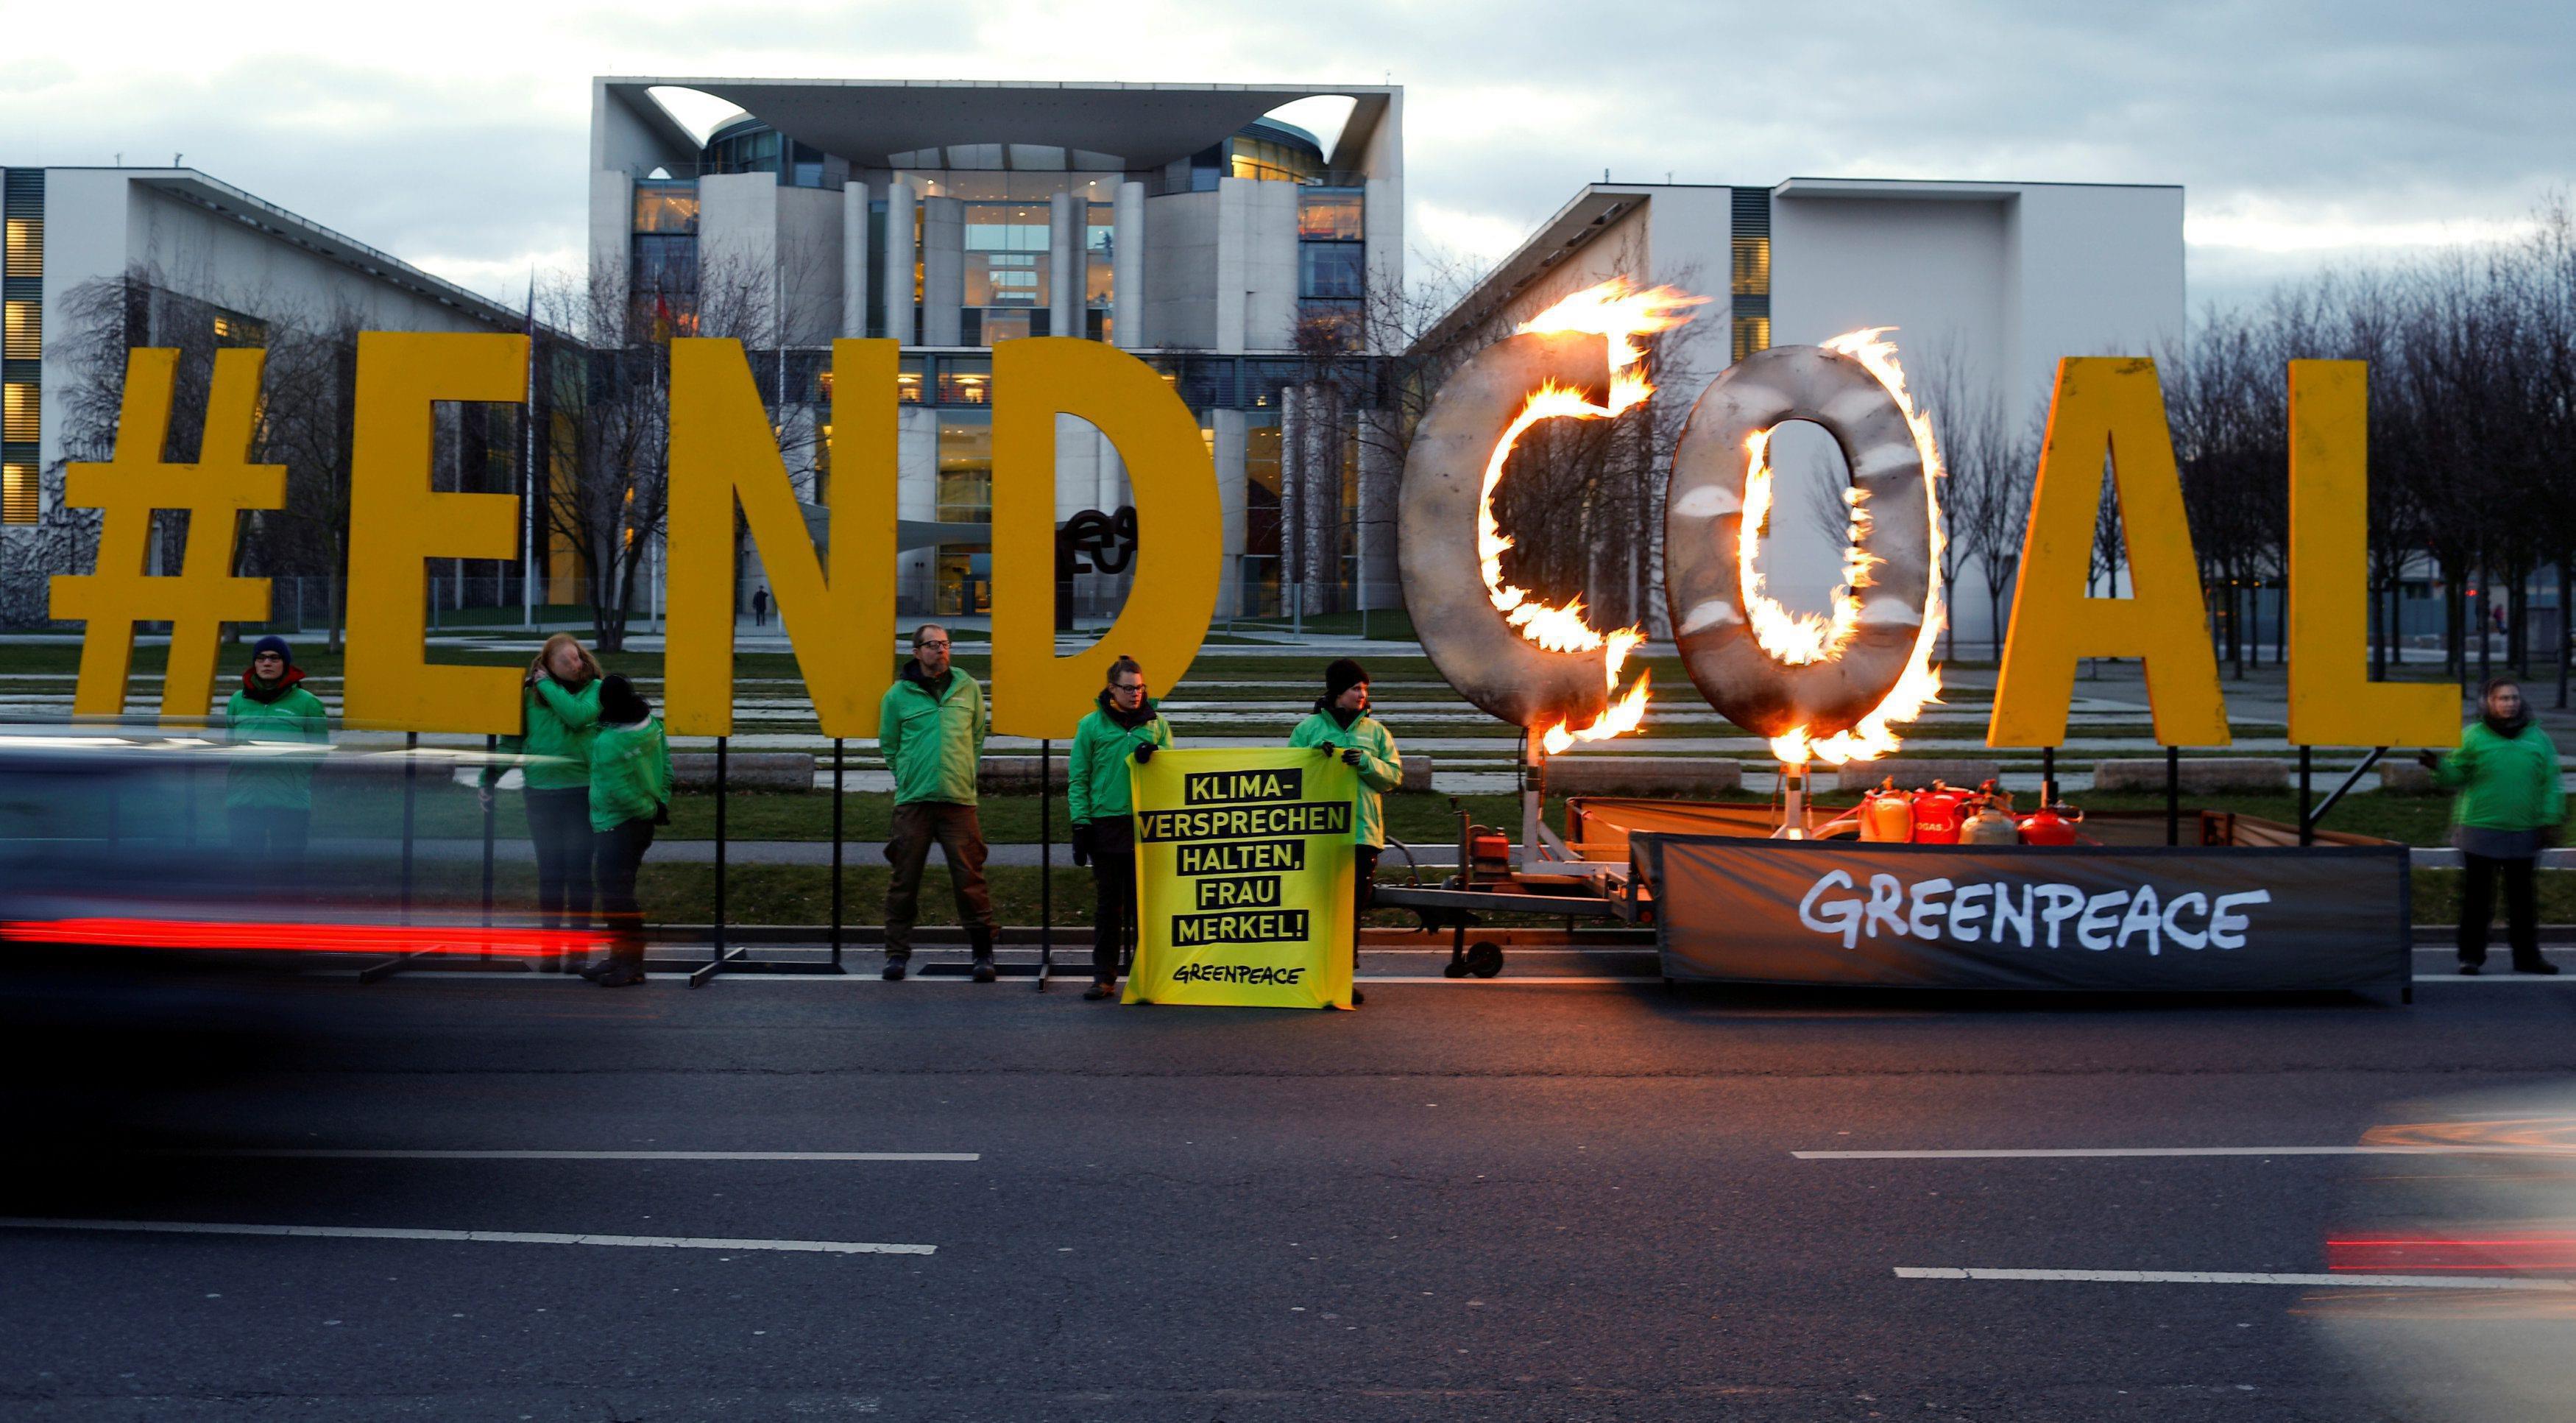 Greenpeace activists set a protest slogan reading 